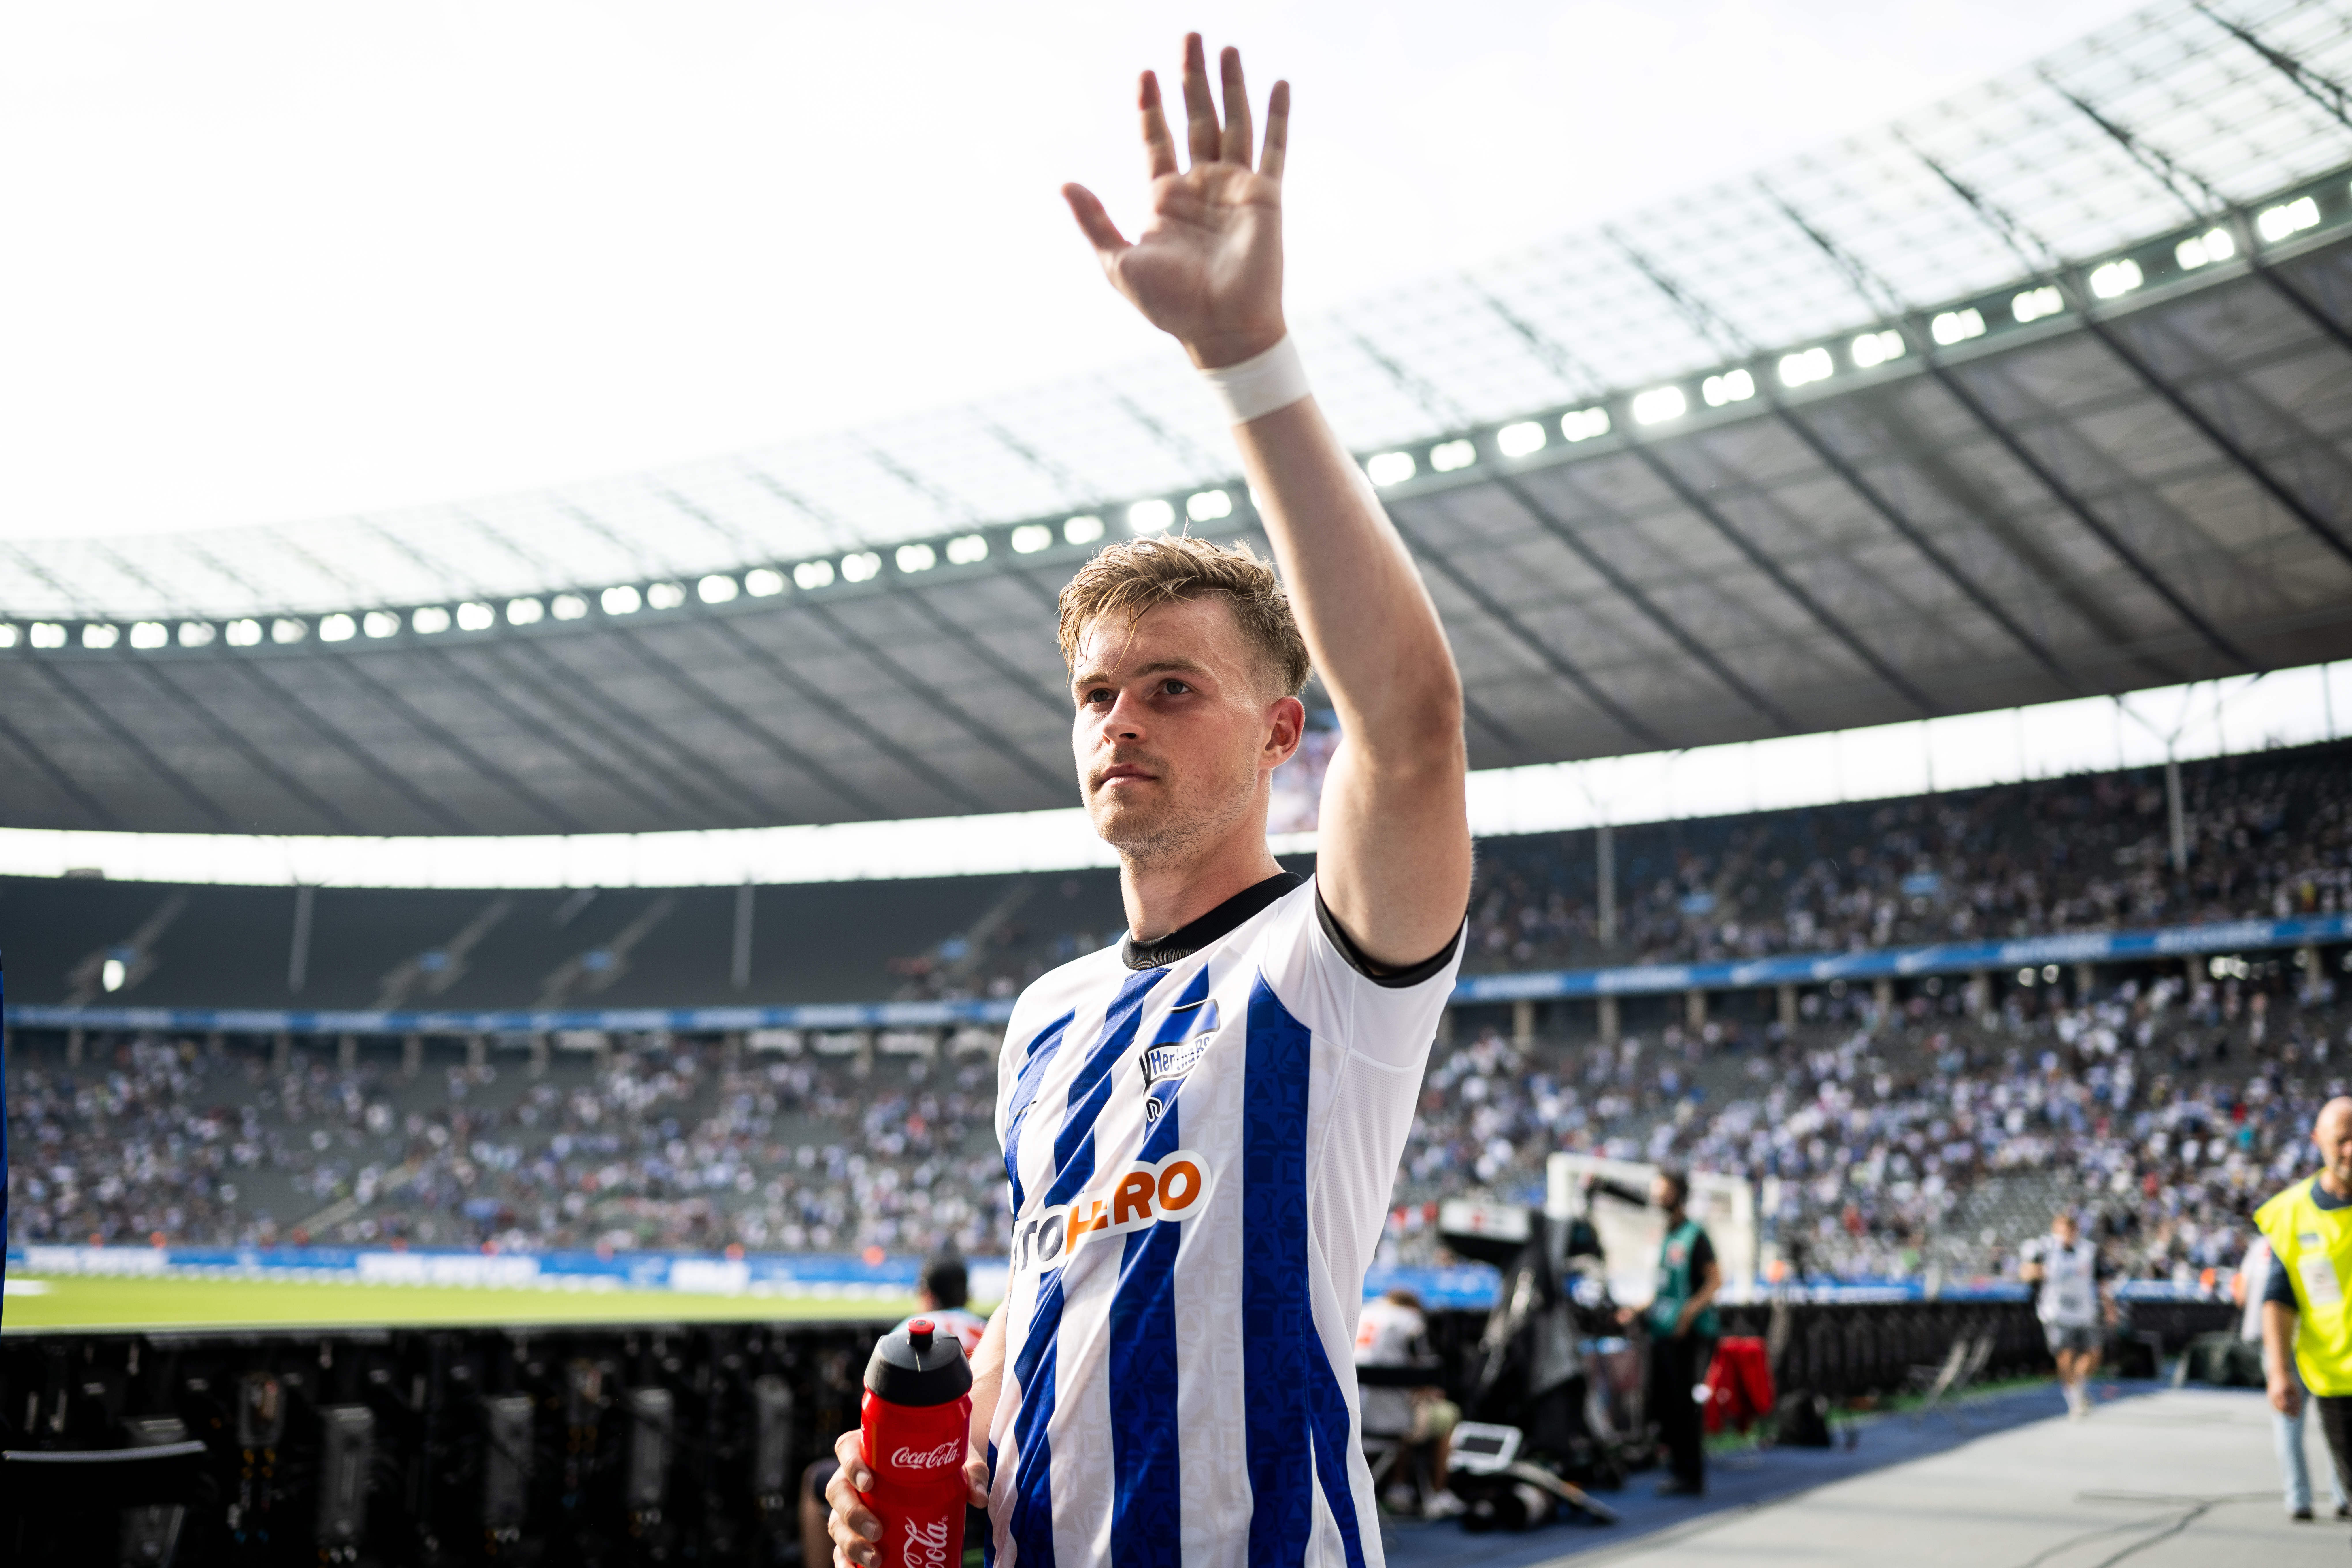 Maxi Mittelstädt waves to the Hertha fans